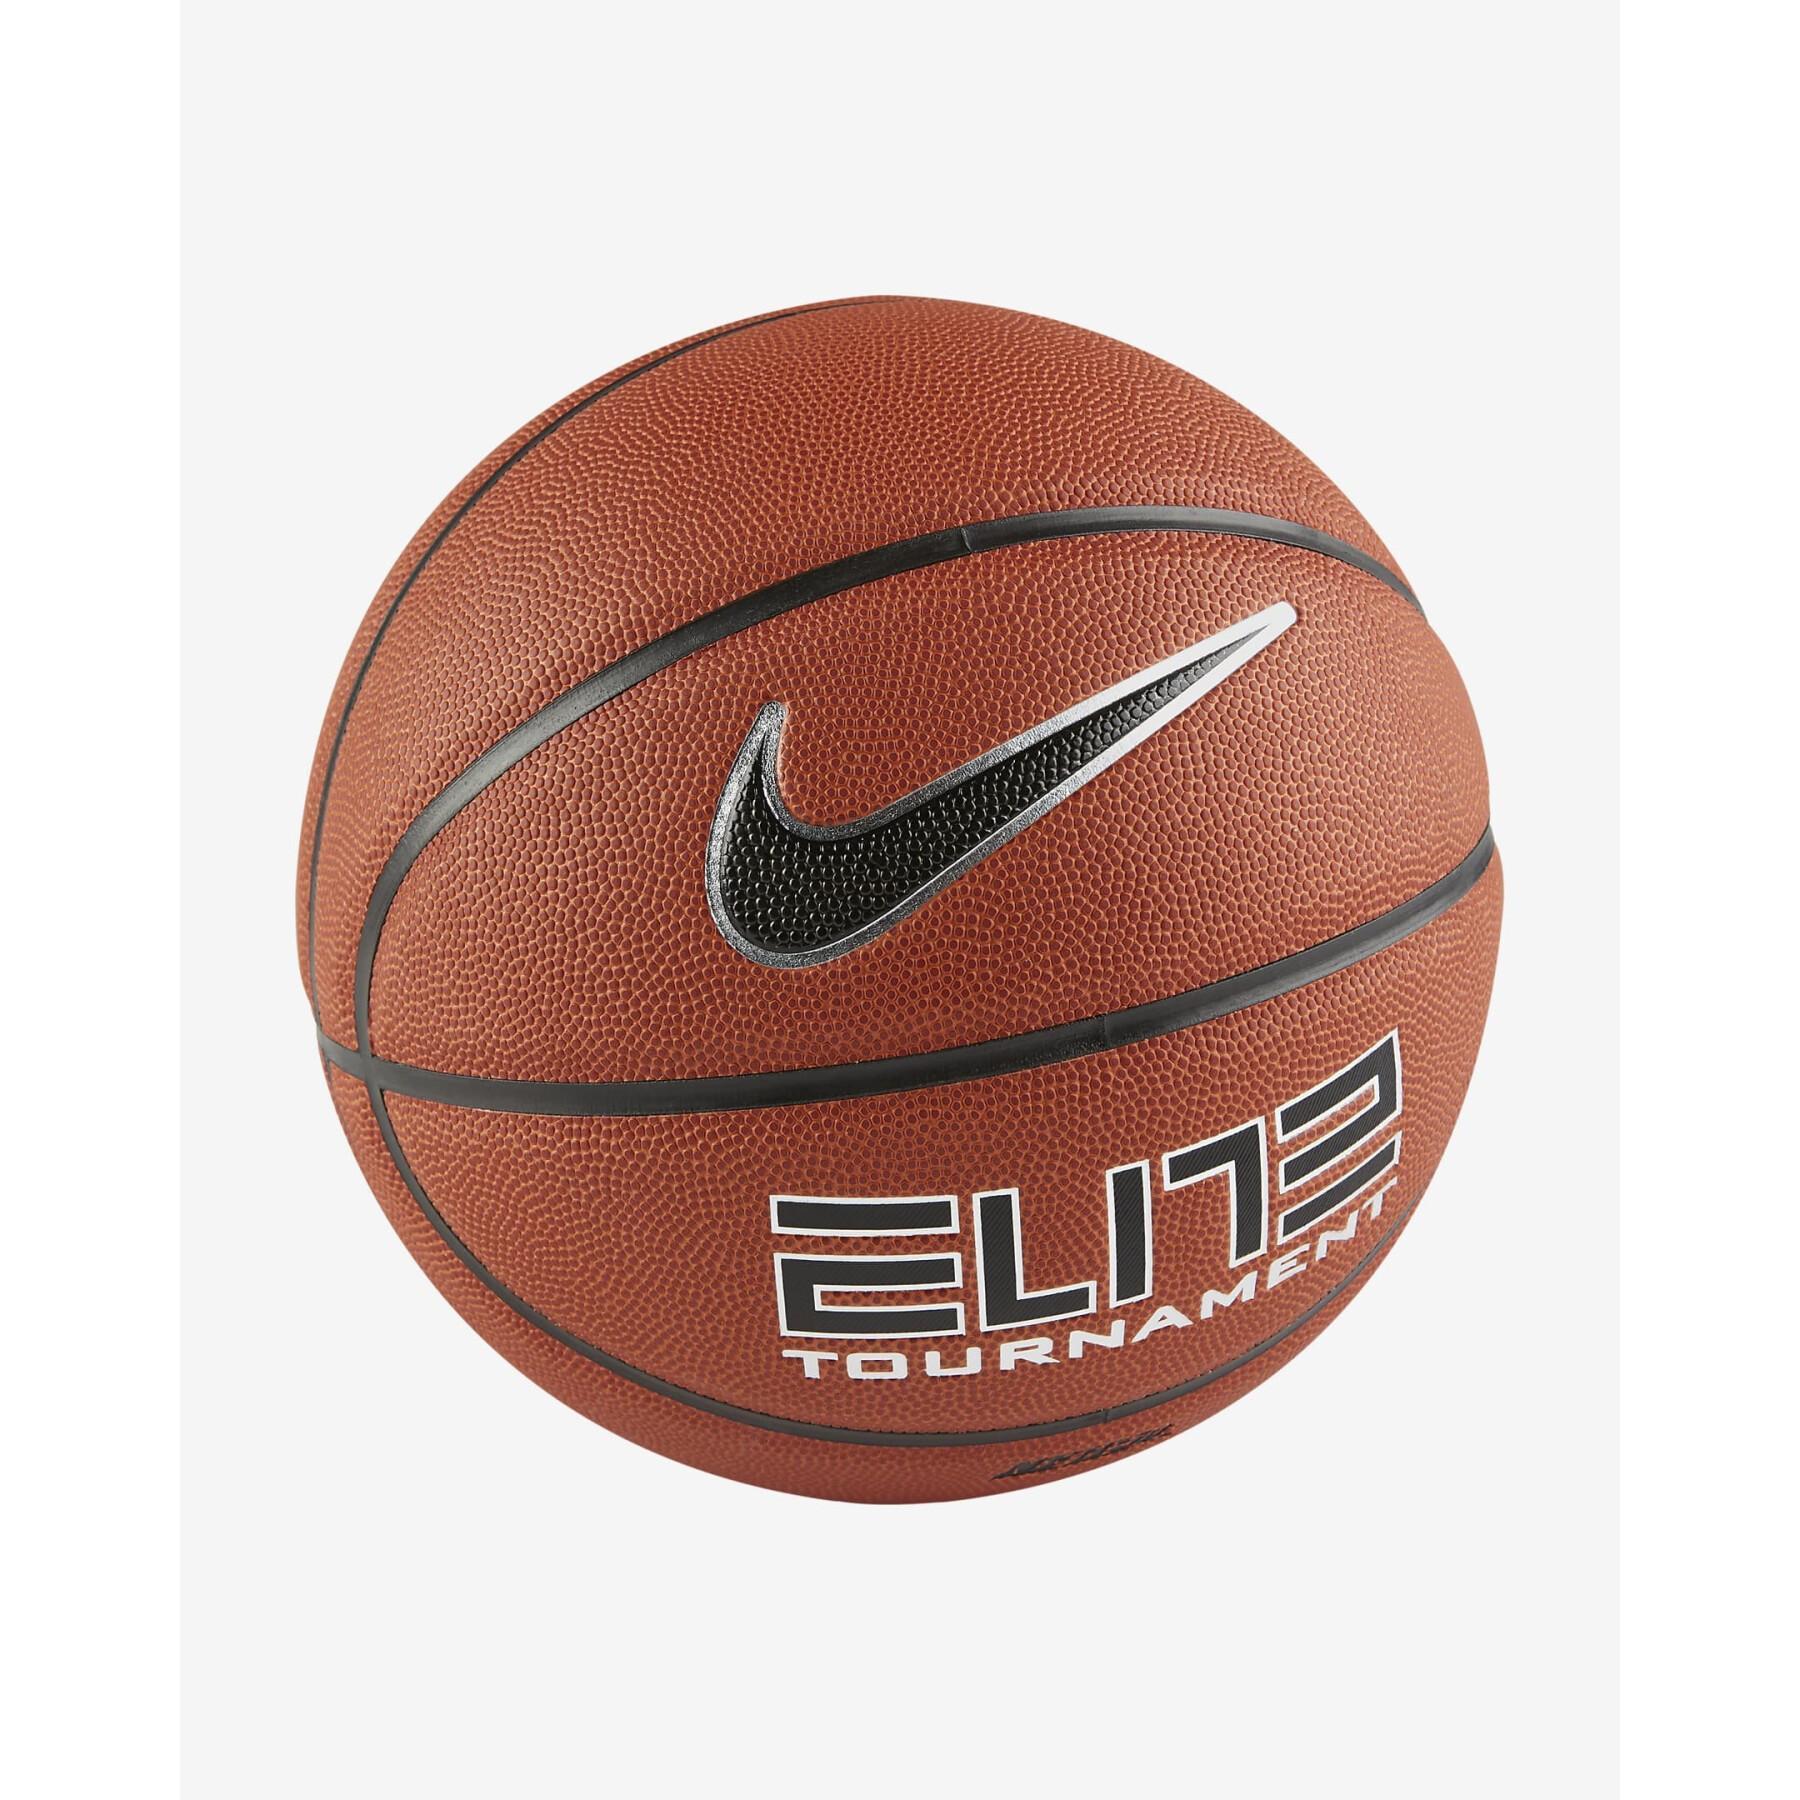 Basketball Nike elite tournament 8p